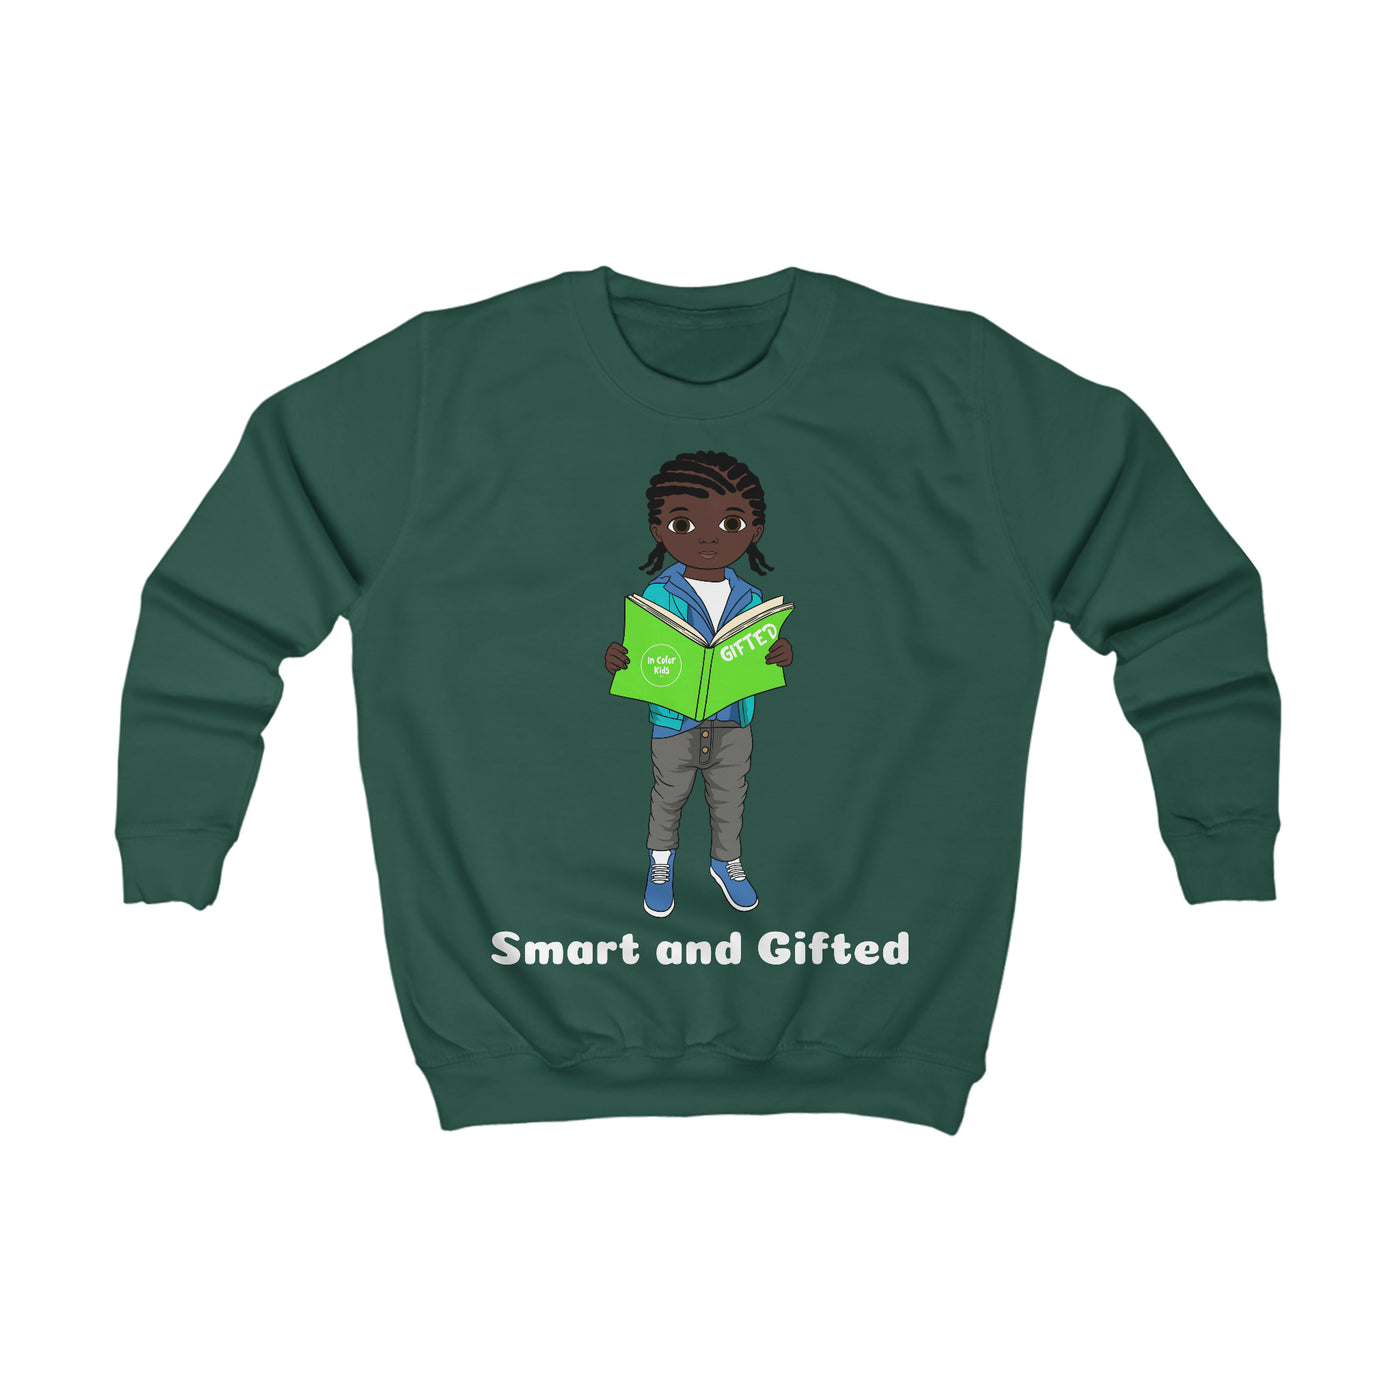 Smart and Gifted Sweatshirt - Dark Chocolate